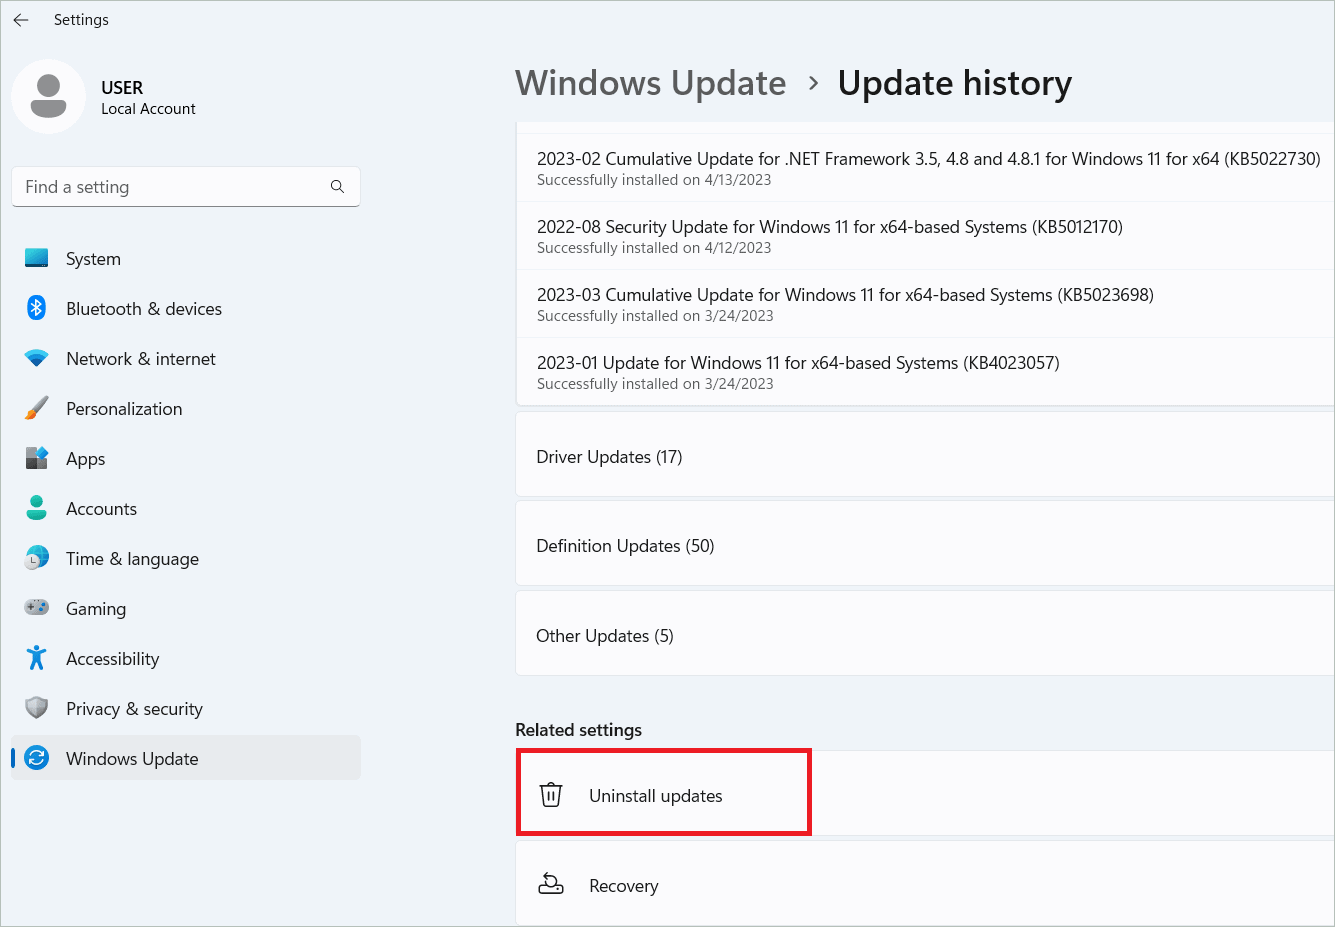 Select Uninstall updates